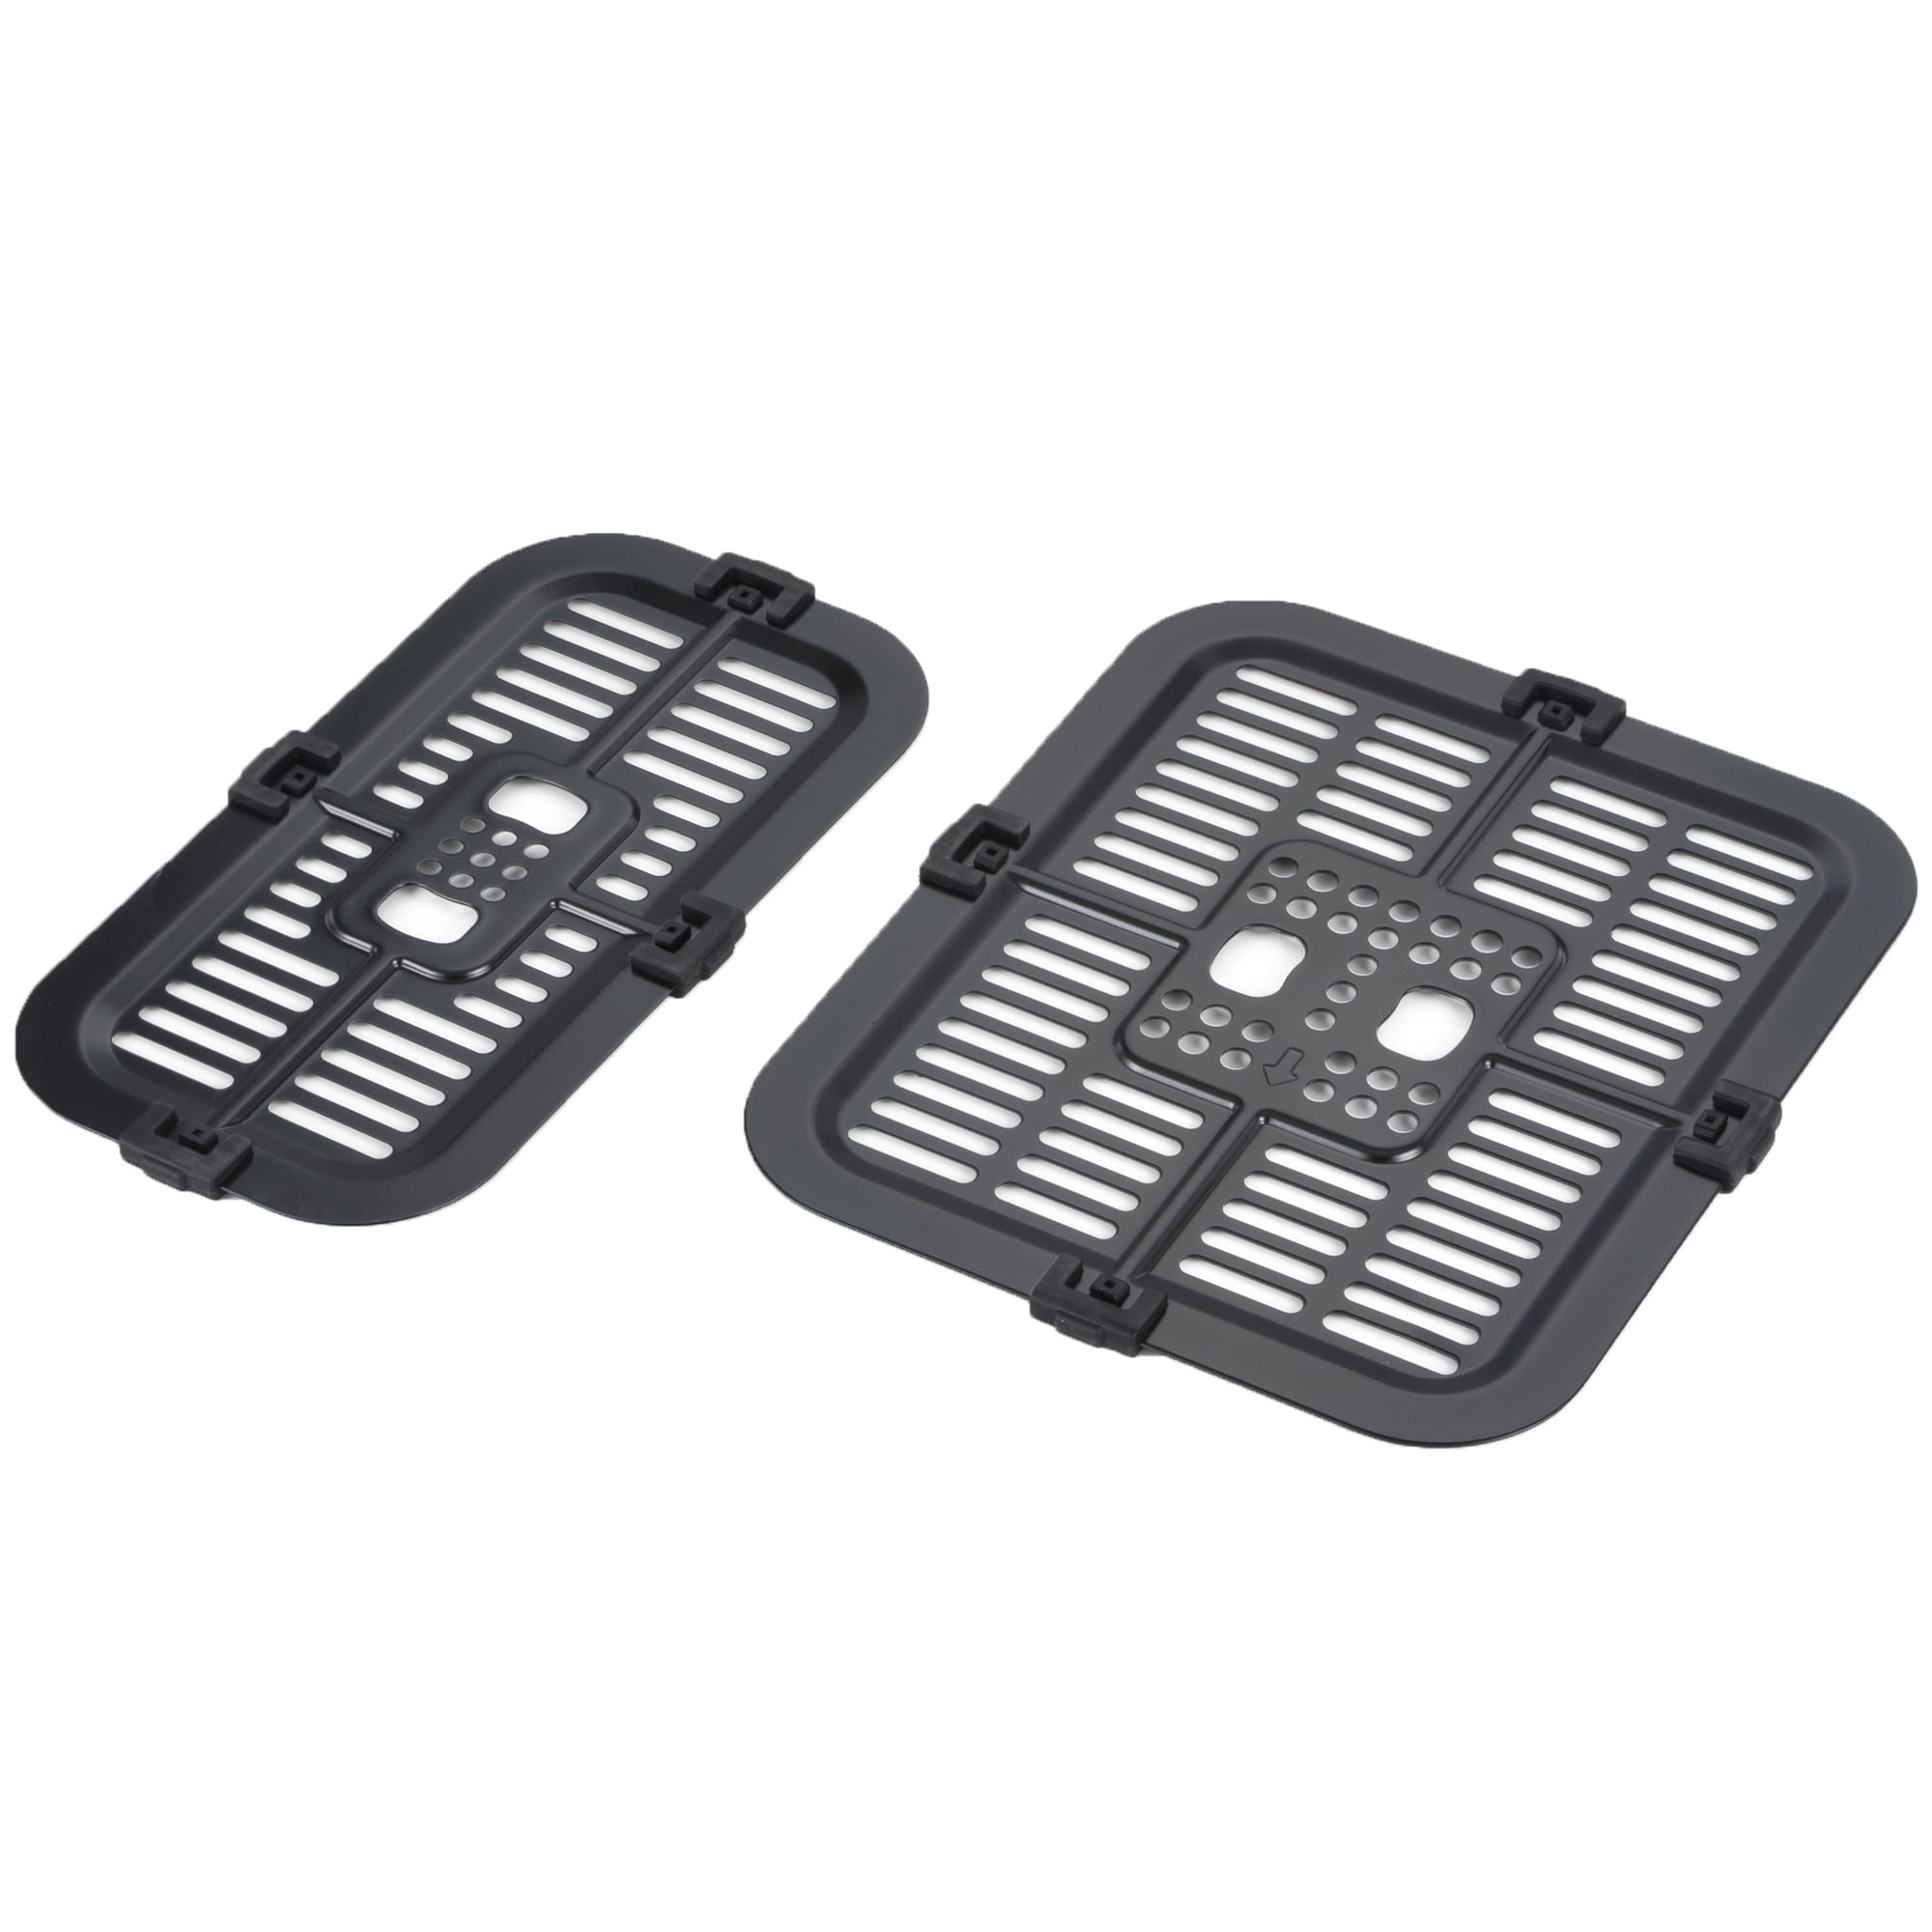 Tru 9 Quart Dual Basket Digital Air Fryer Black and Stainless